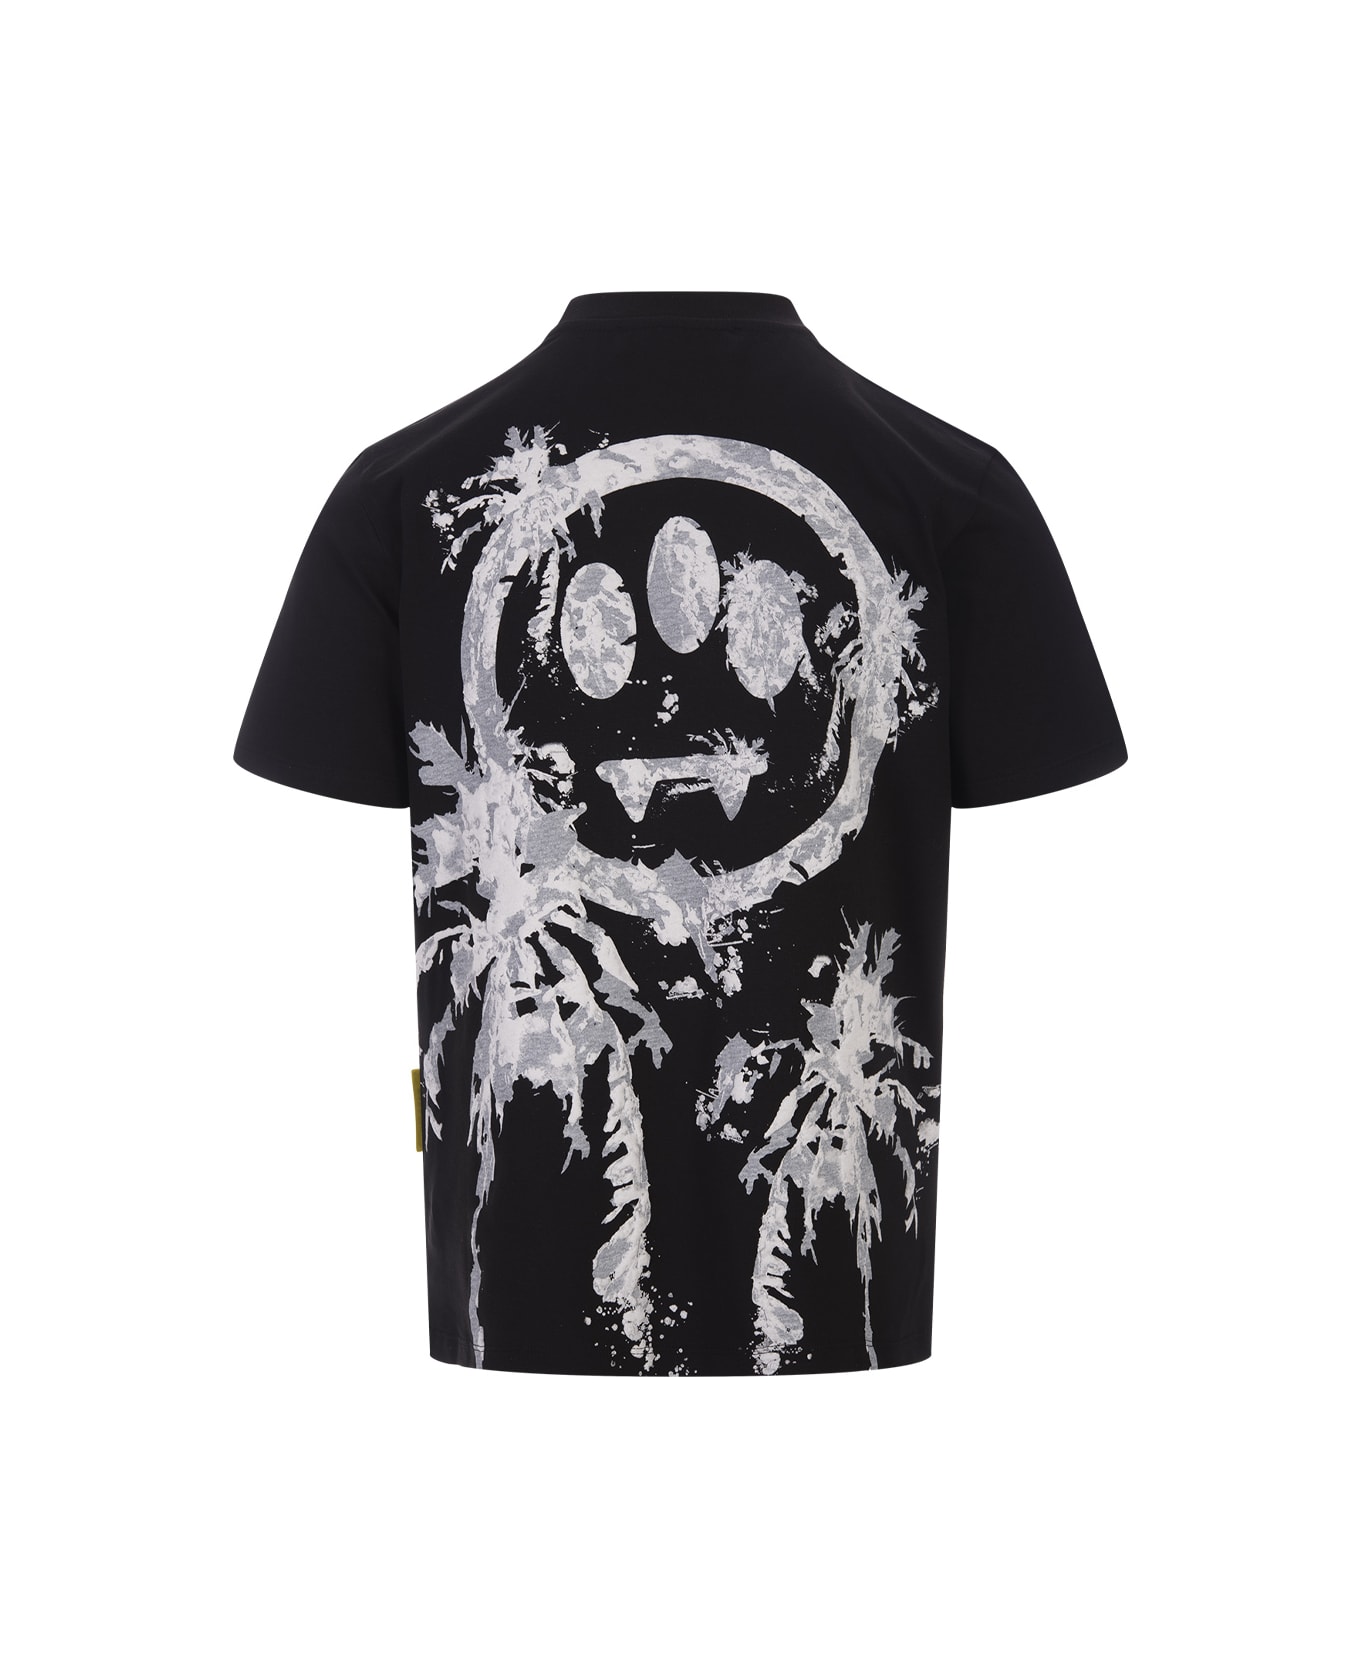 Barrow Black T-shirt With 3d Palm Tree Print - Black